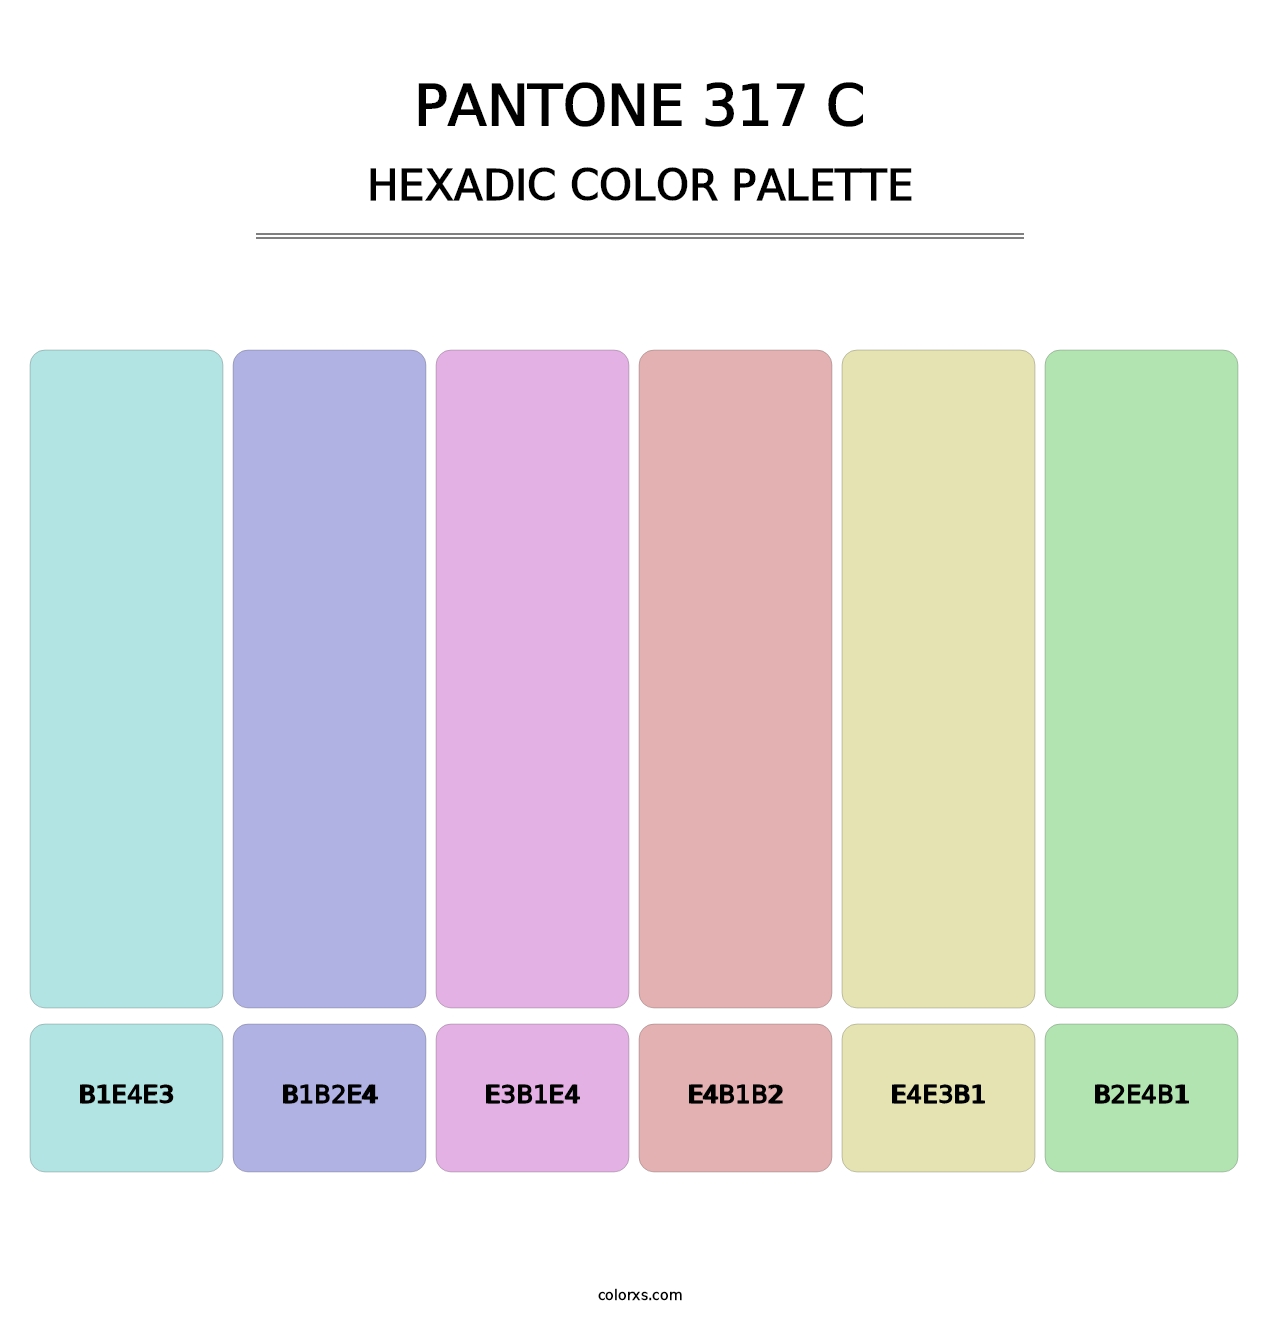 PANTONE 317 C - Hexadic Color Palette